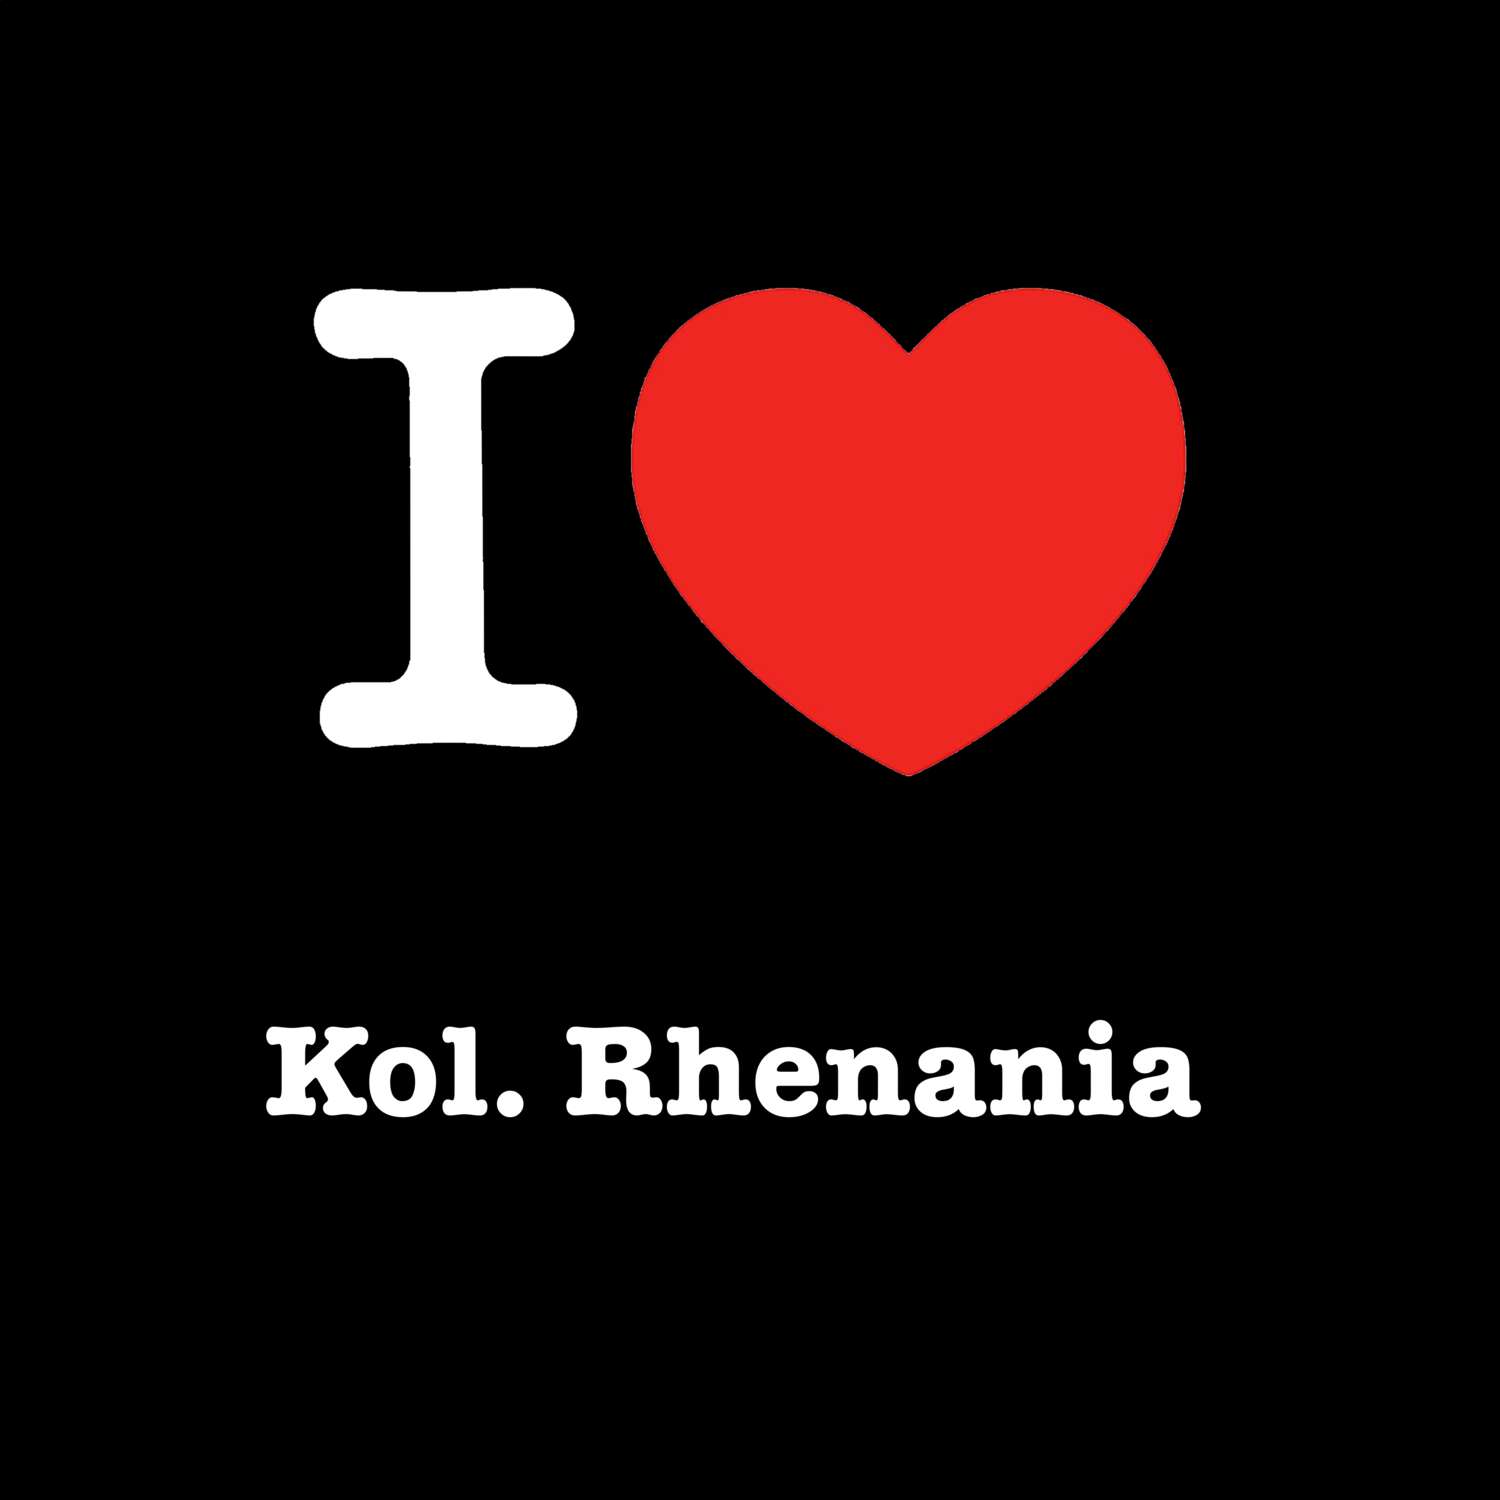 Kol. Rhenania T-Shirt »I love«